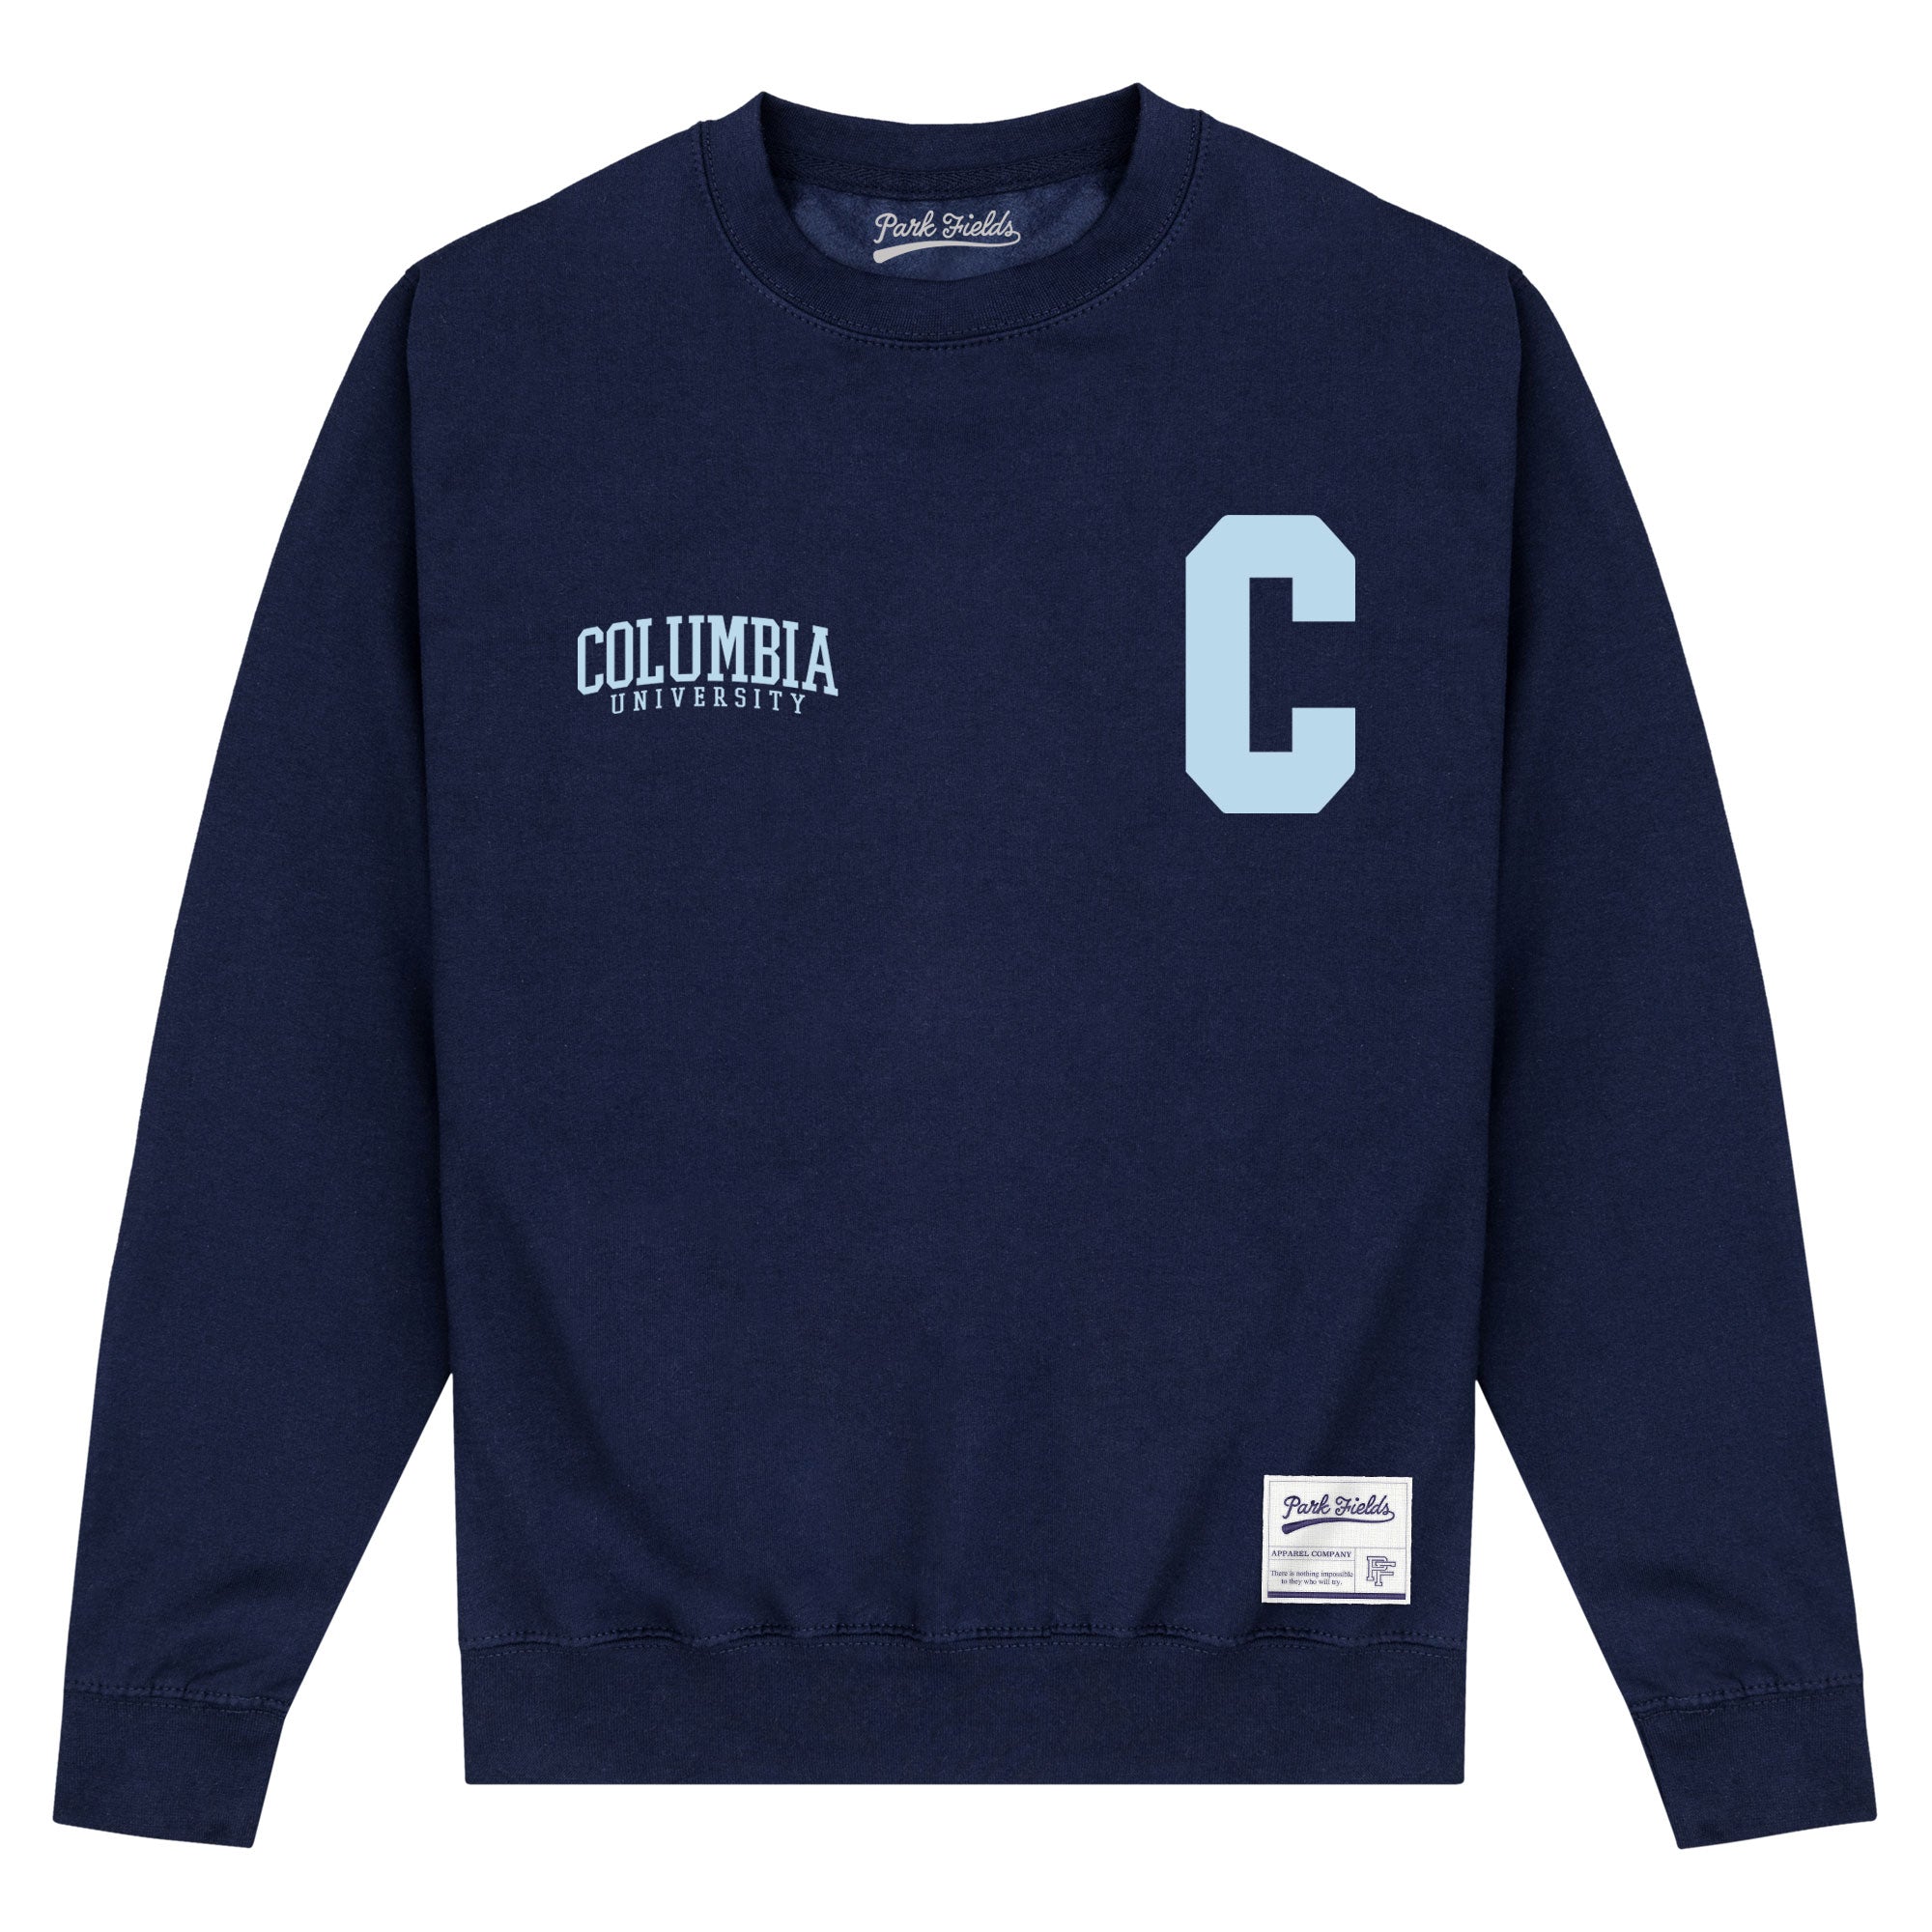 Columbia University C Navy Sweatshirt